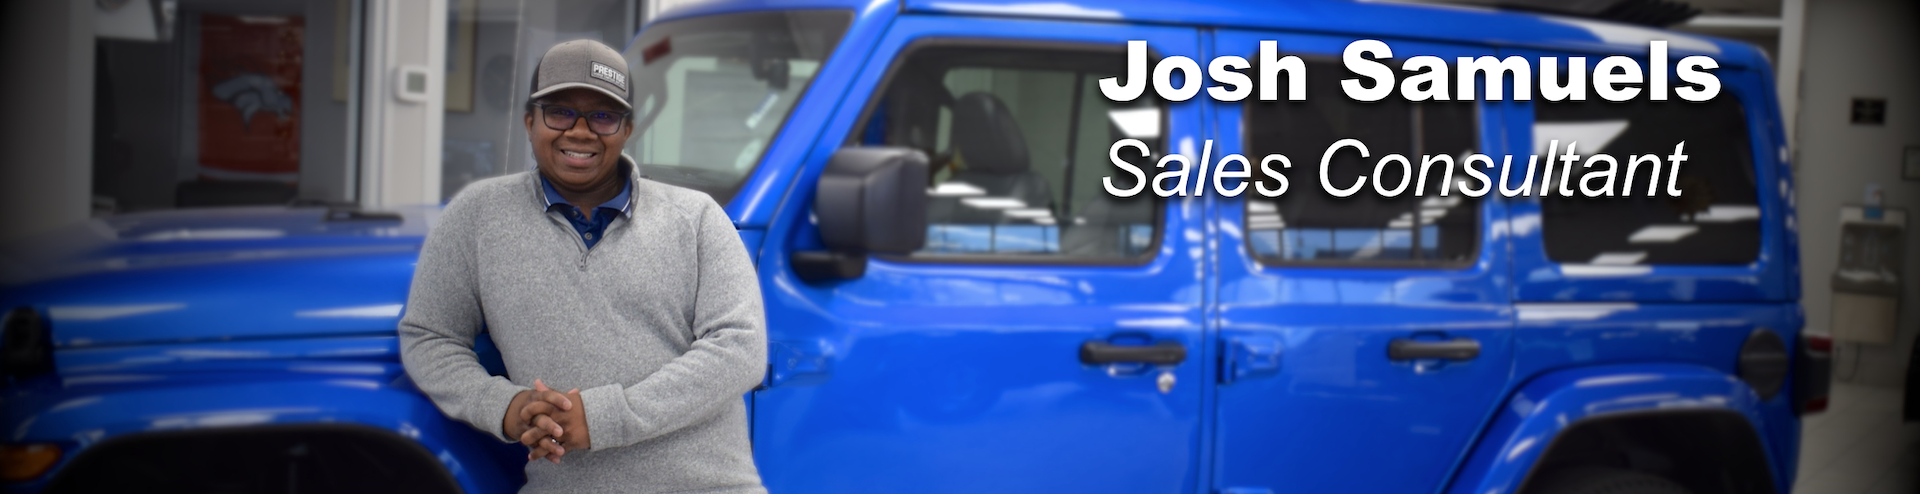 josh samuels sales consultant prestige chrysler dodge jeep ram